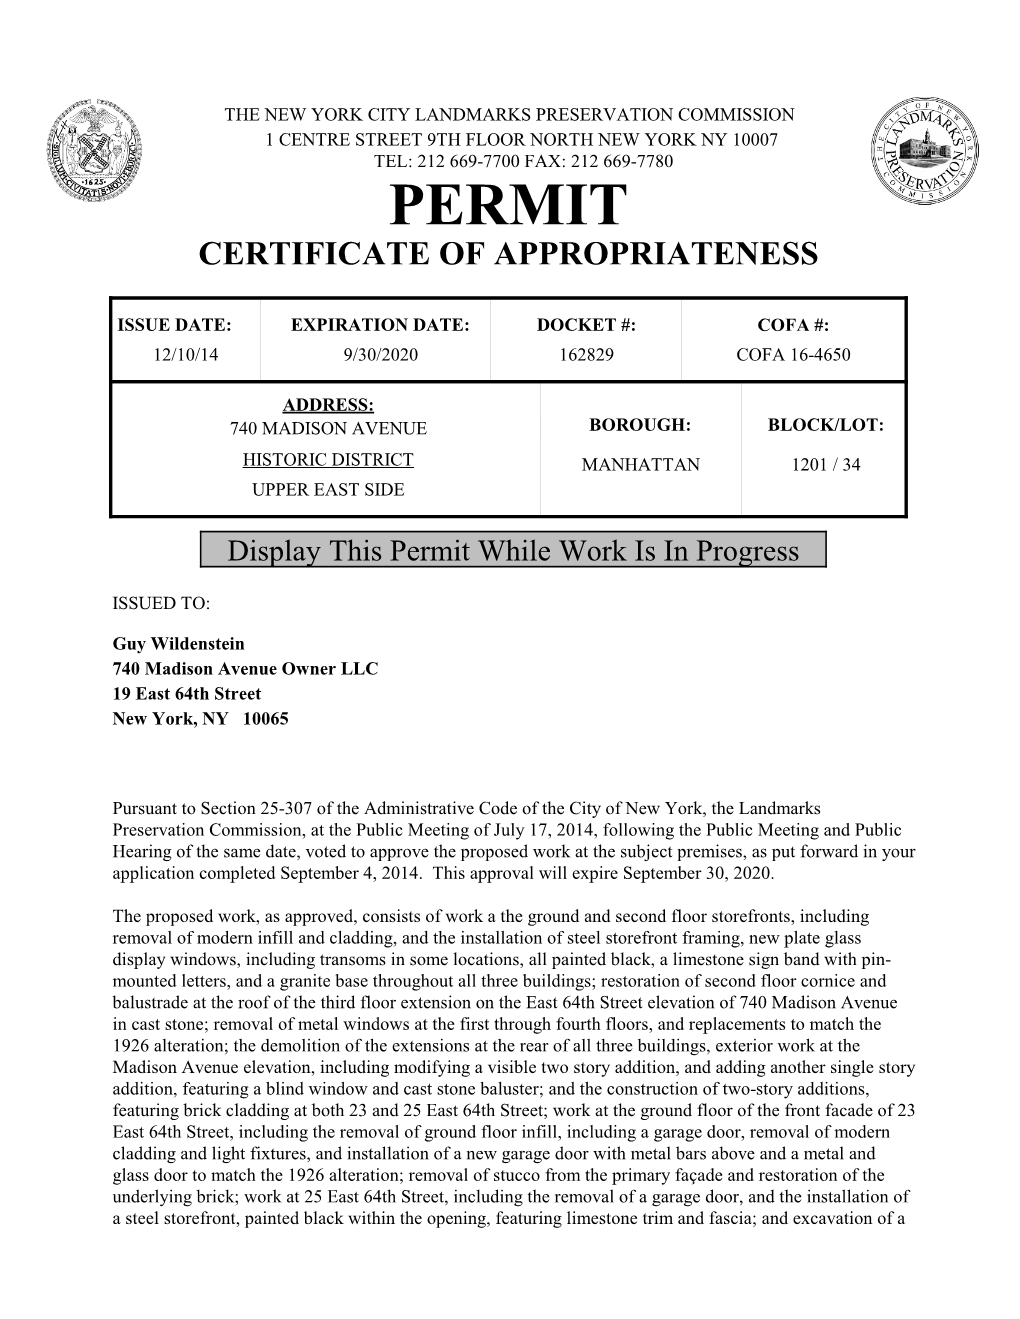 Permit Certificate of Appropriateness